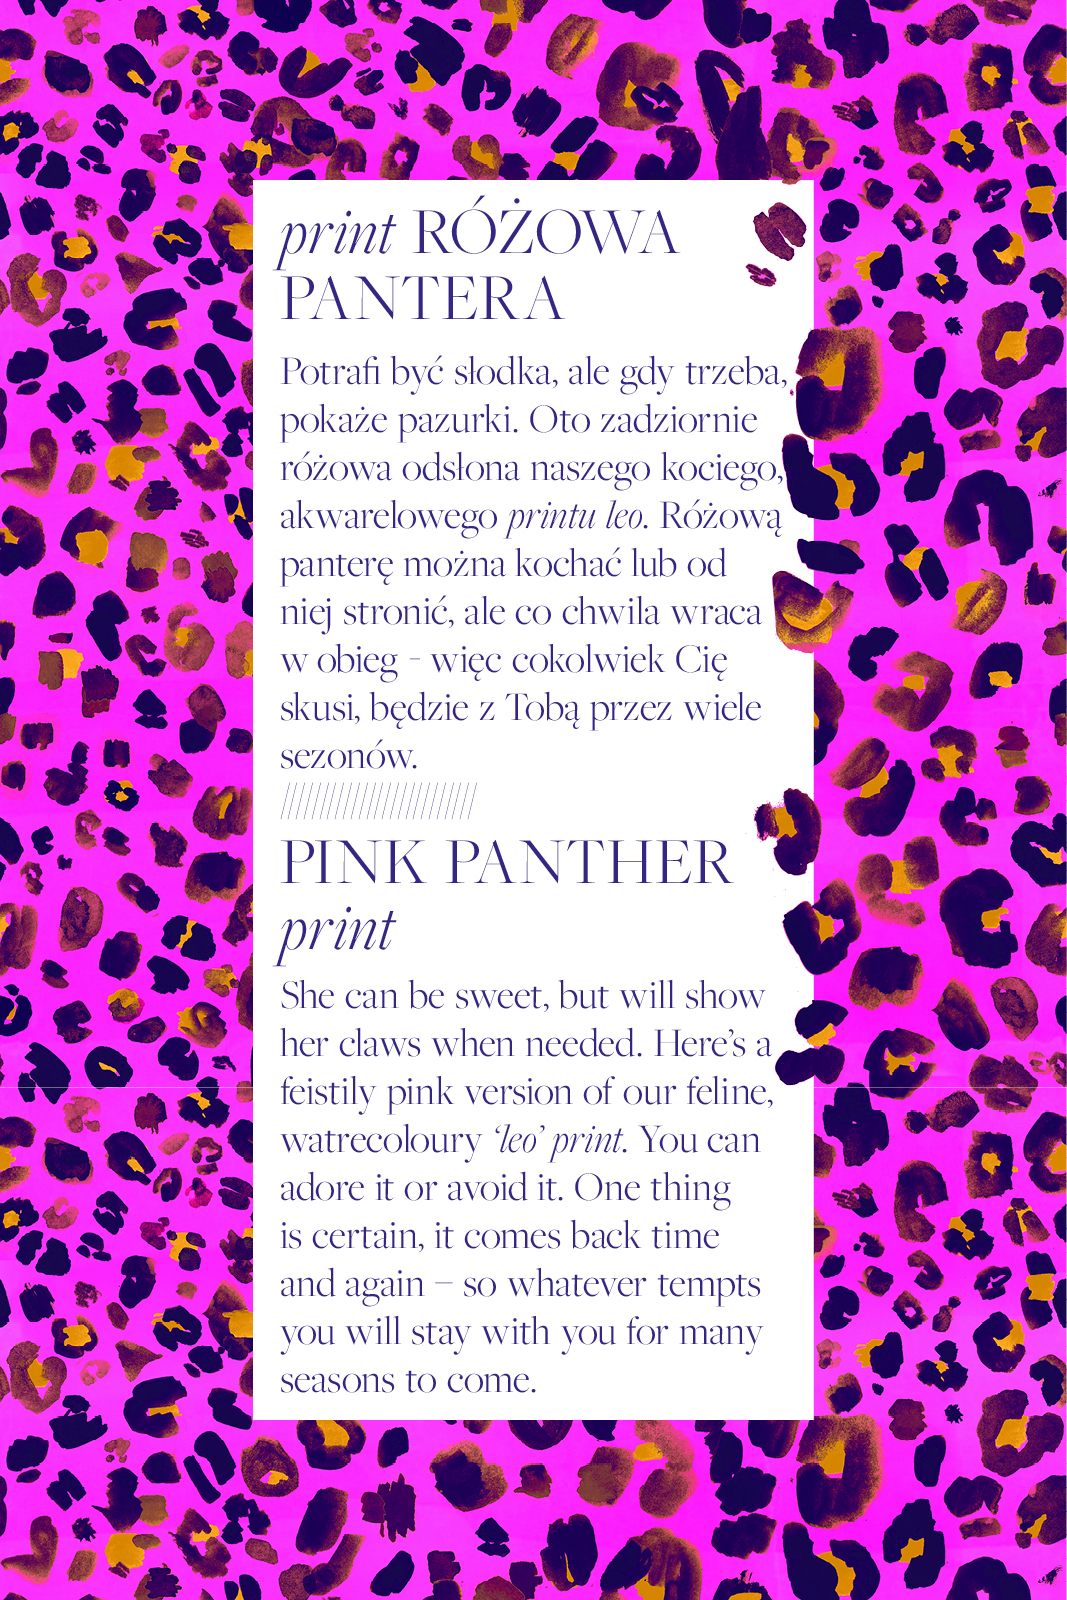 JUTRO BĘDZIE NASZE print różowa pantera